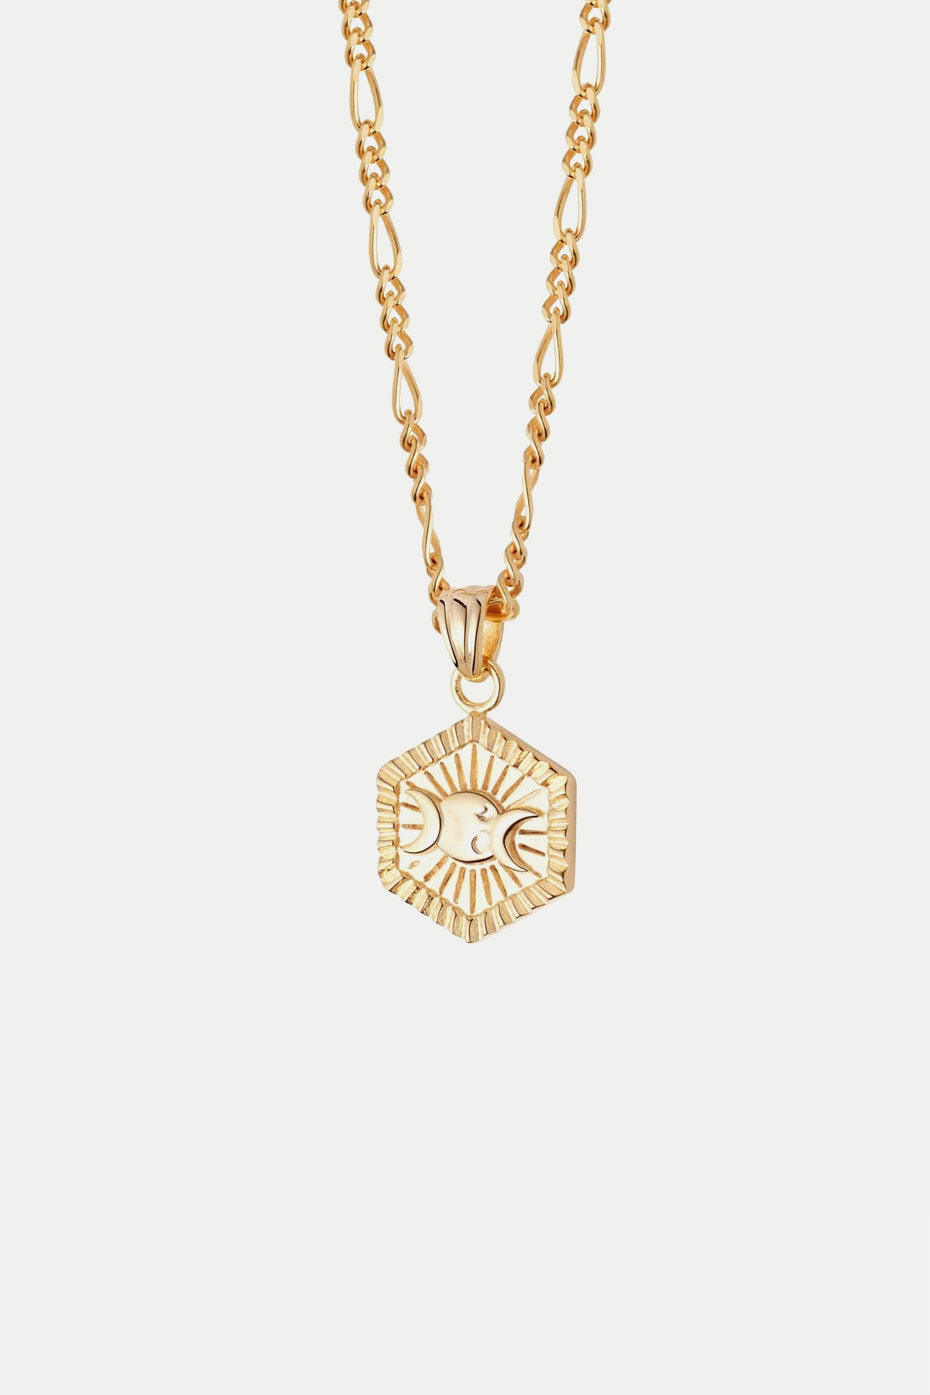 Daisy London Gold Estee Lalonde Goddess Hexagonal Necklace